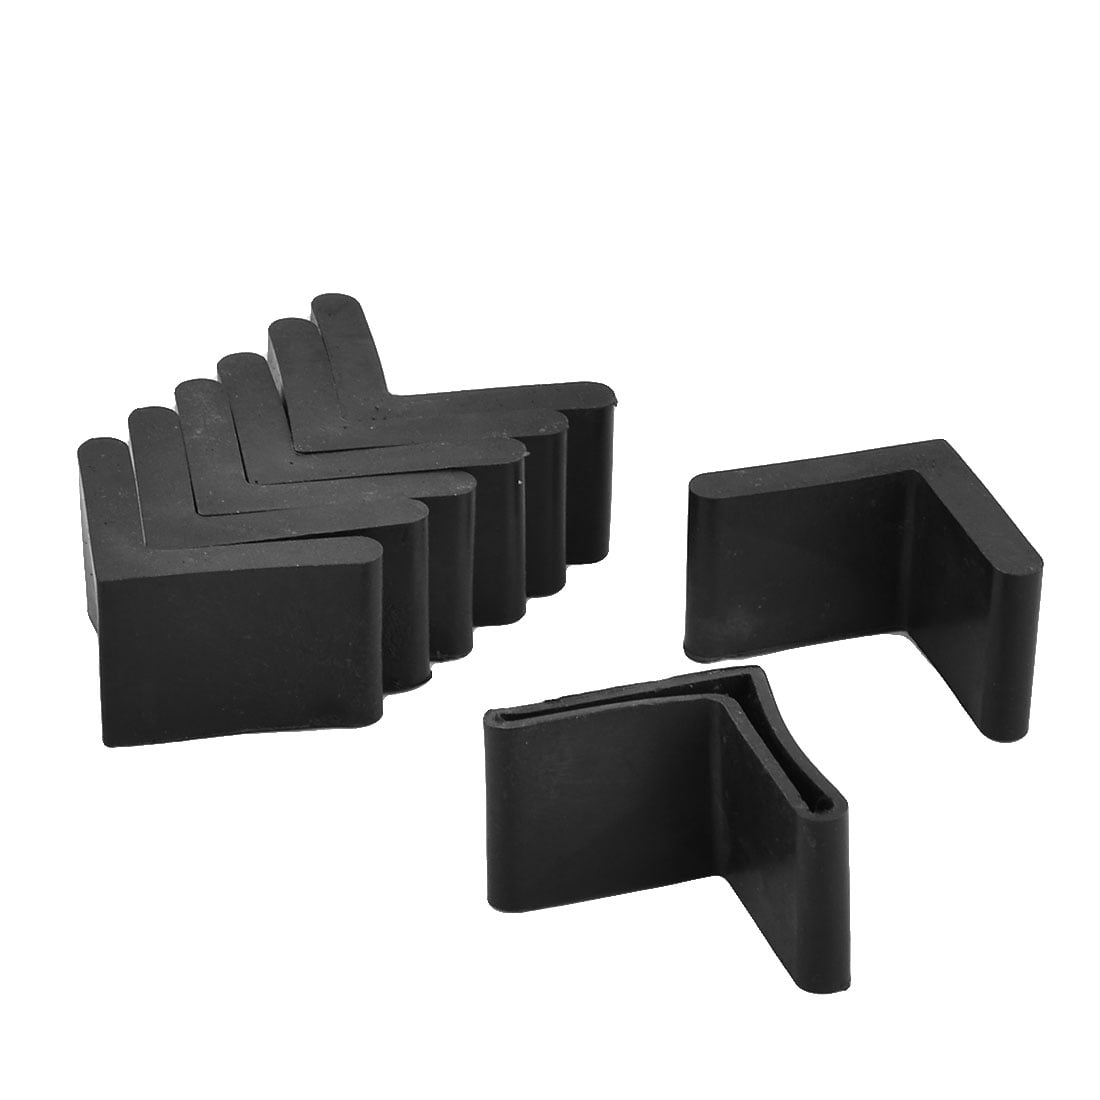 Cabinet Table Corner Rubber Cushion Cover Guard Protector Bumper Pad 8pcs 